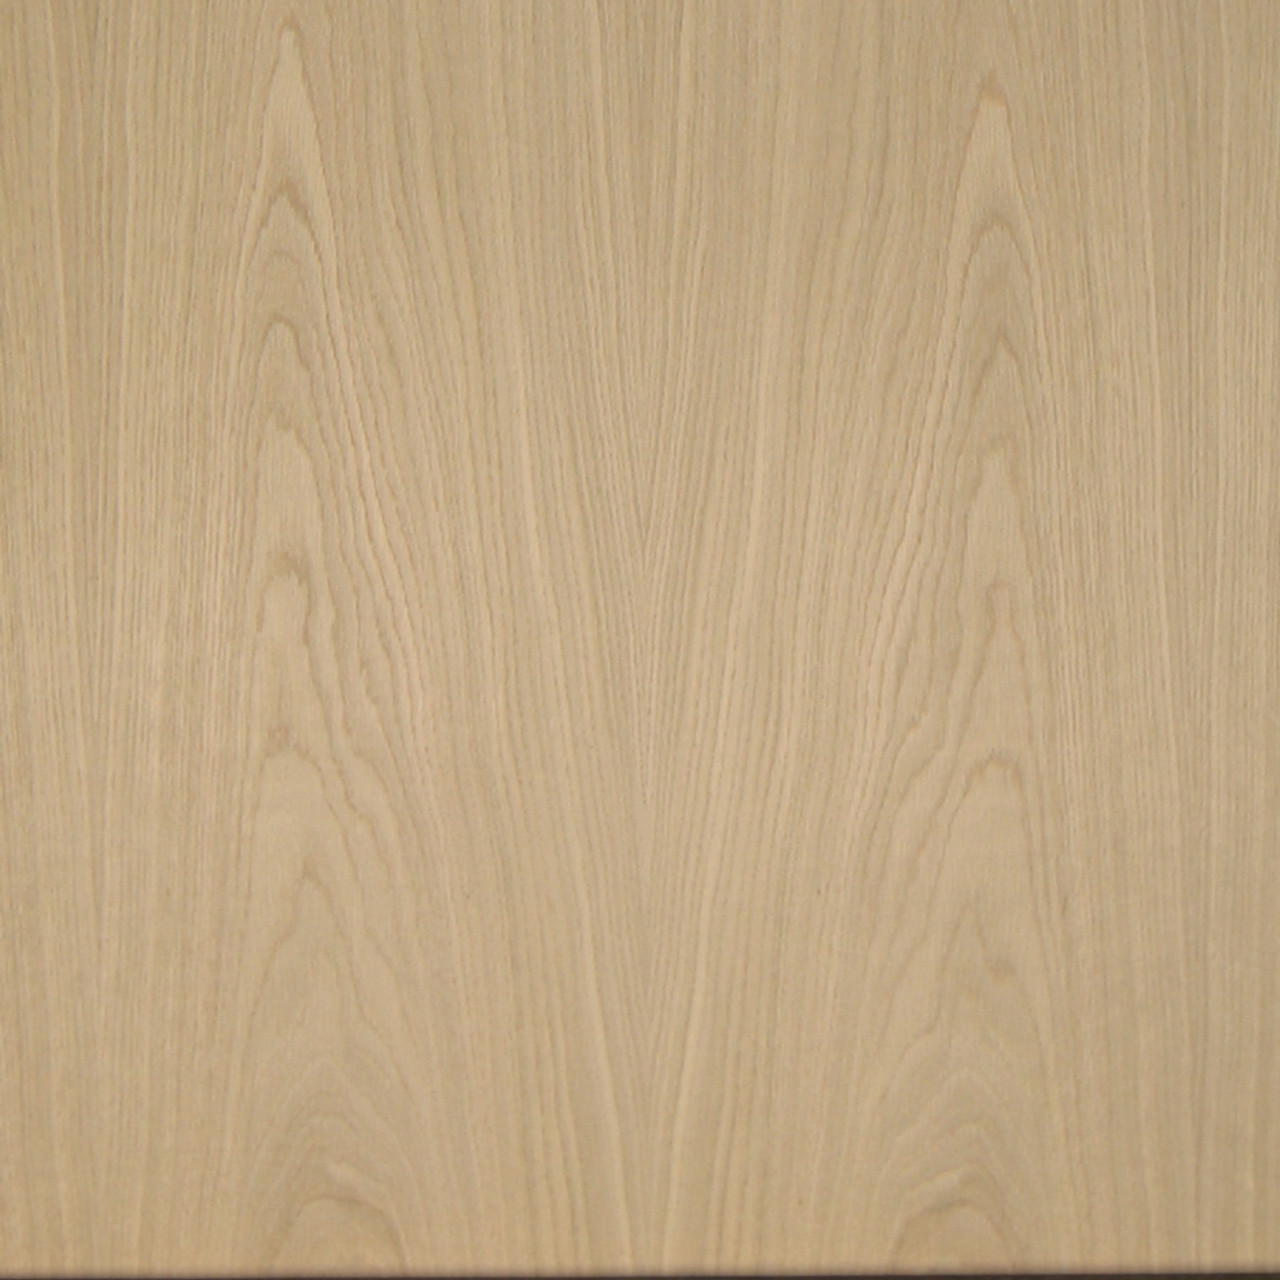 Bamboo Hardwood Sample (1/2x3x6) - Woodworkers Source